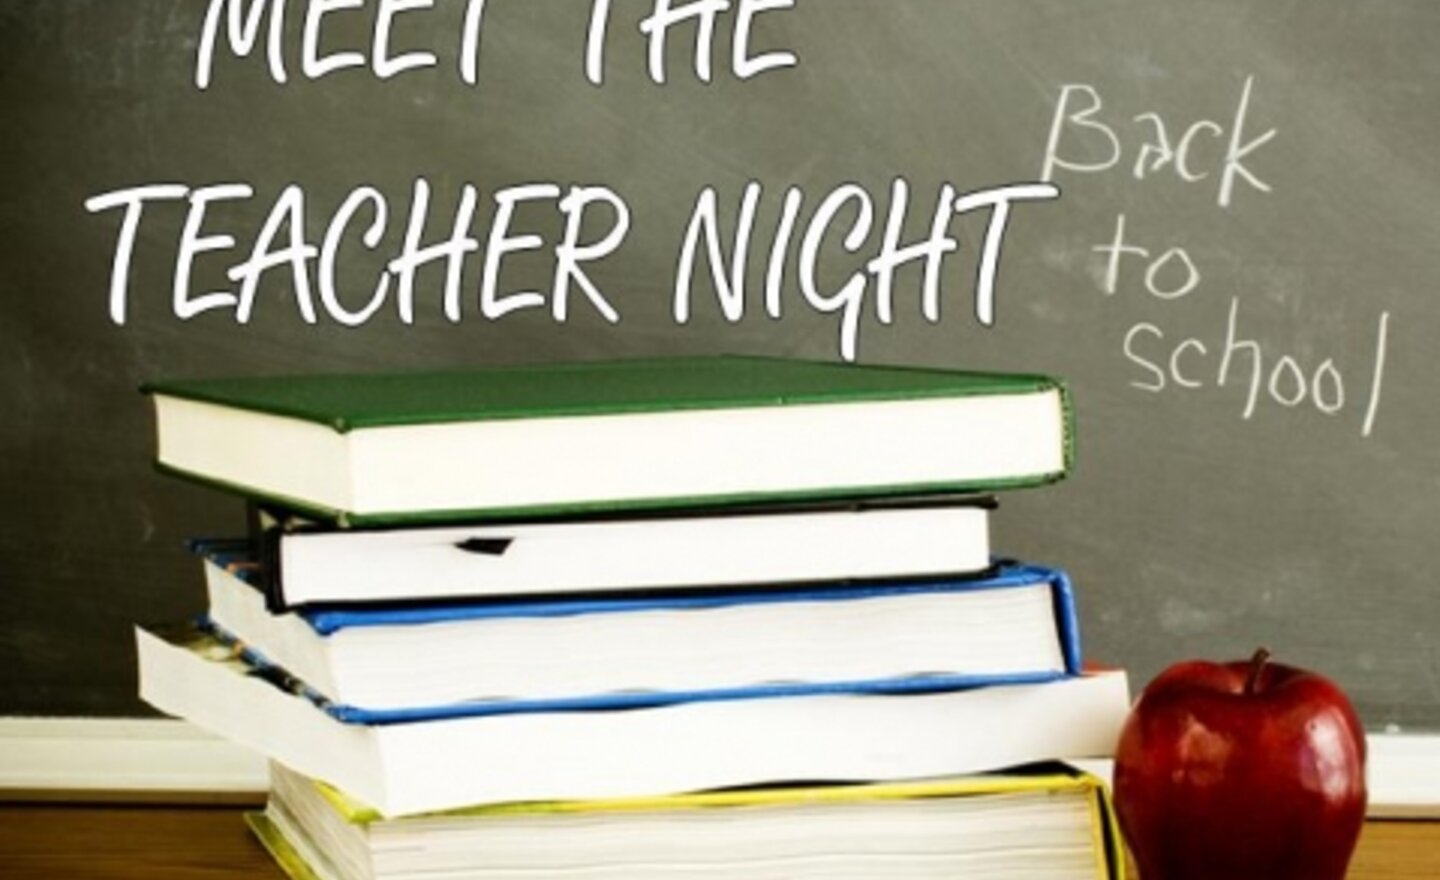 Image of Meet the teacher night